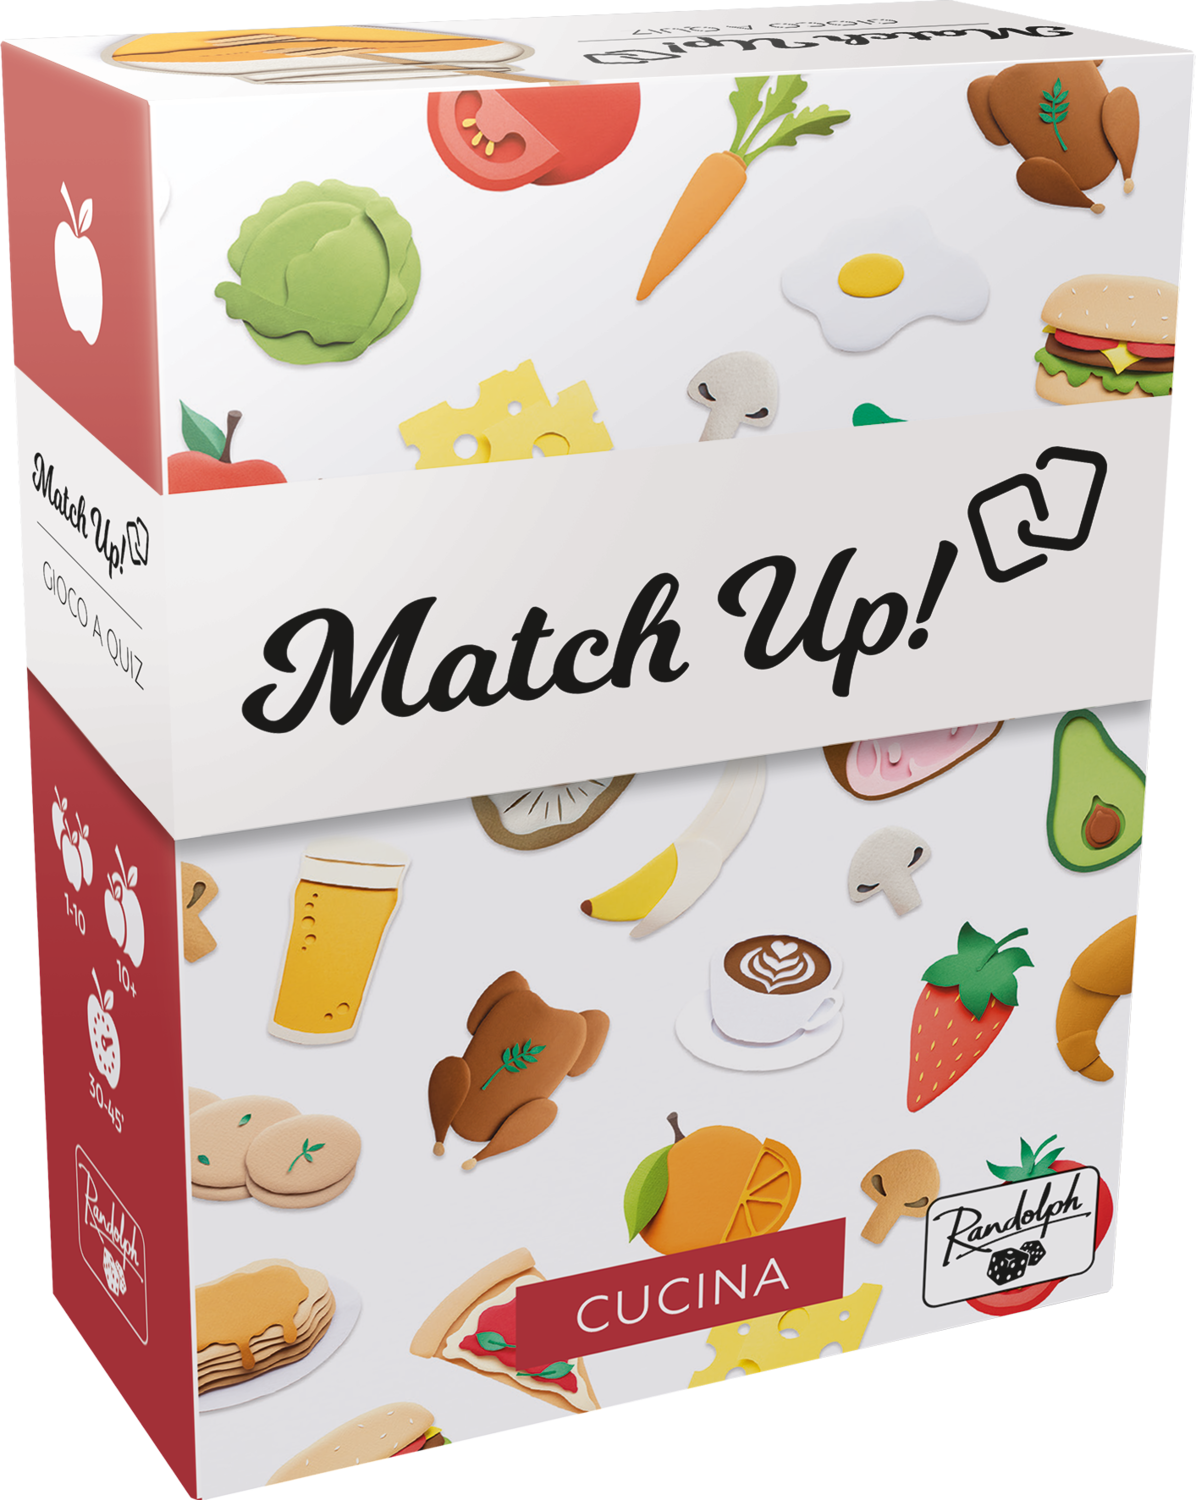 Match Up! Cucina